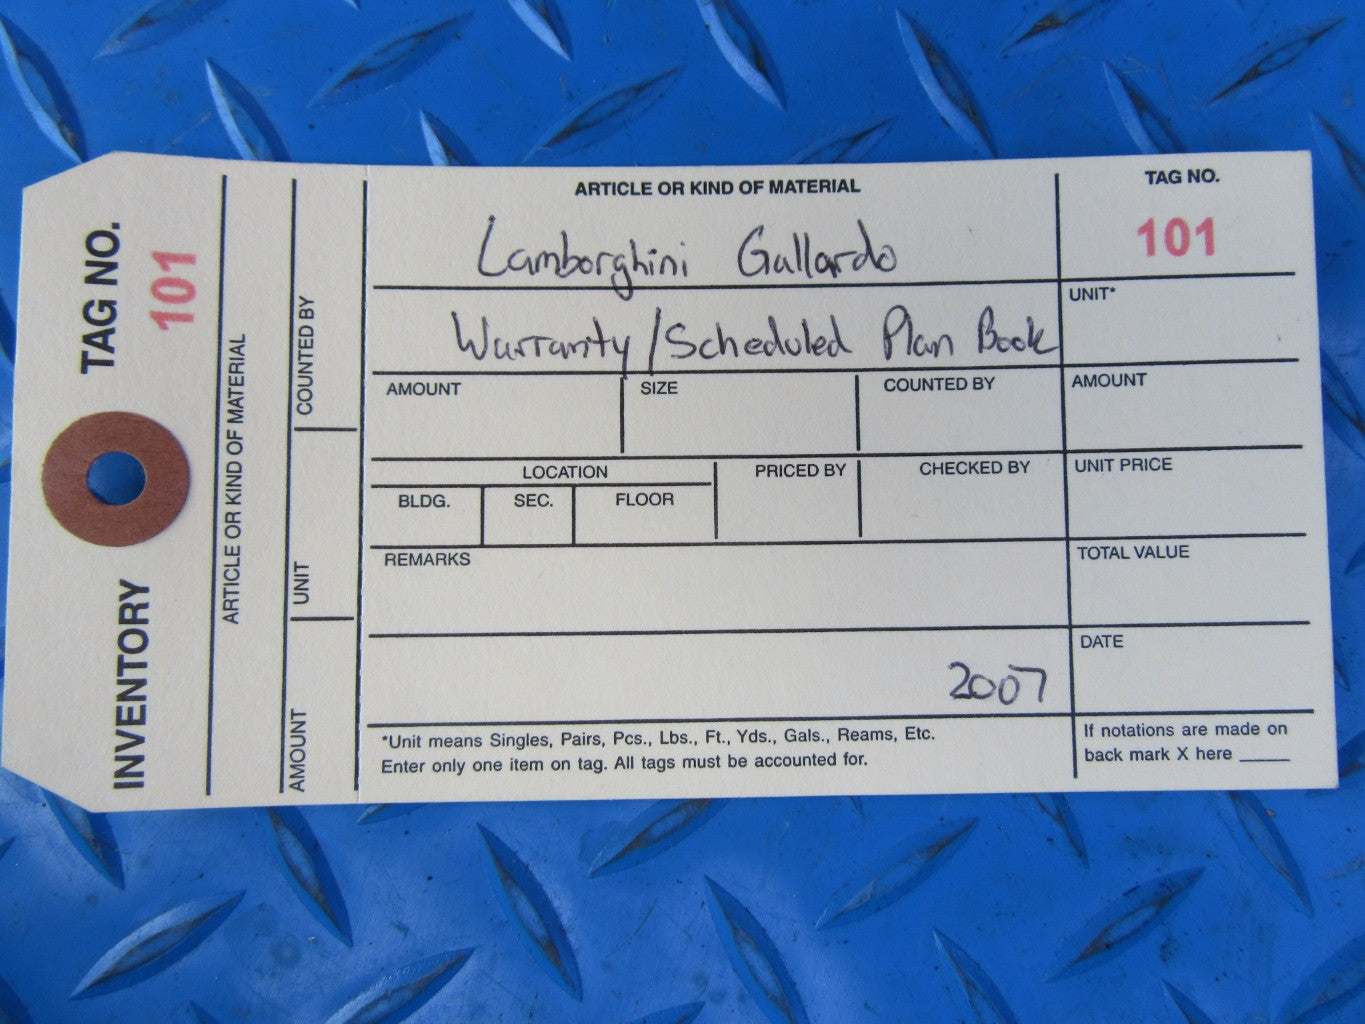 Lamborghini Gallardo warranty and scheduled maintenance plan booklet #0101